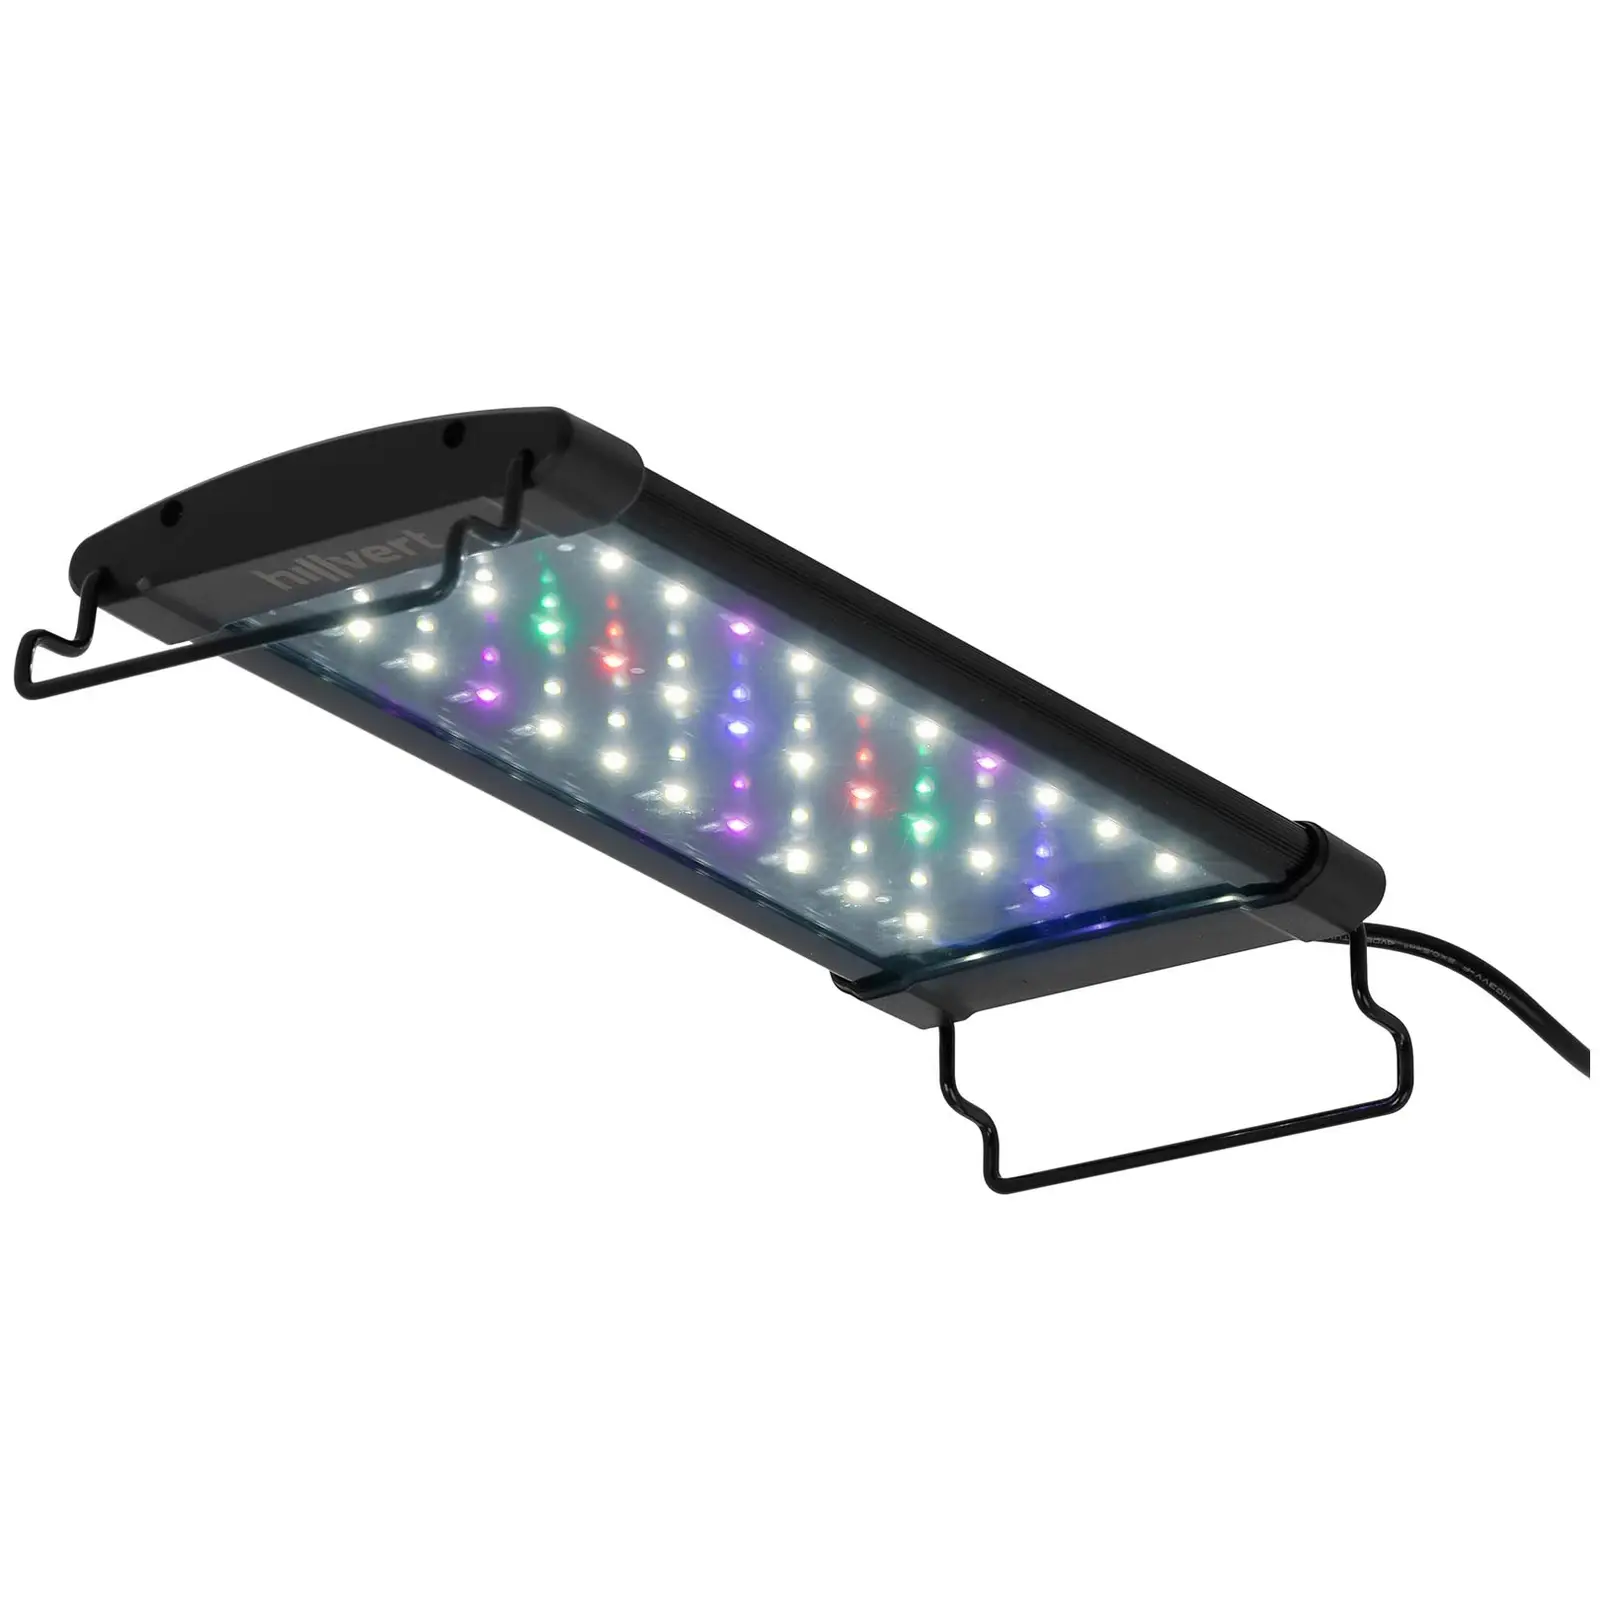 Outlet Lampa LED do akwarium - 33 diody LED - 6 W - 27 cm